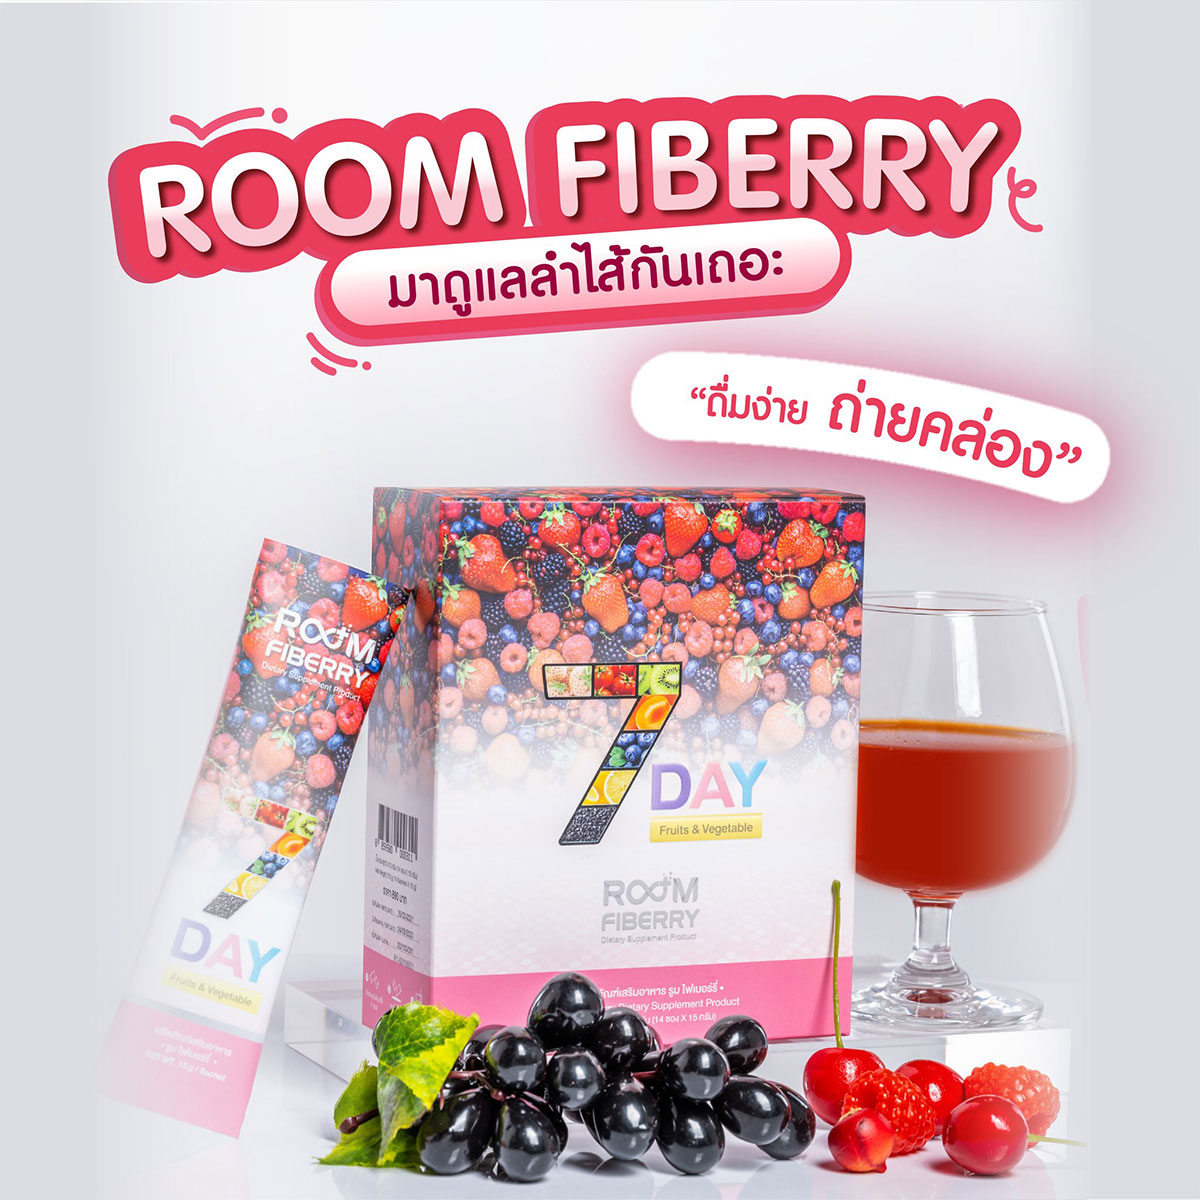 Room Fiberry ชวนคุณมาดูแลลำไส้กัน